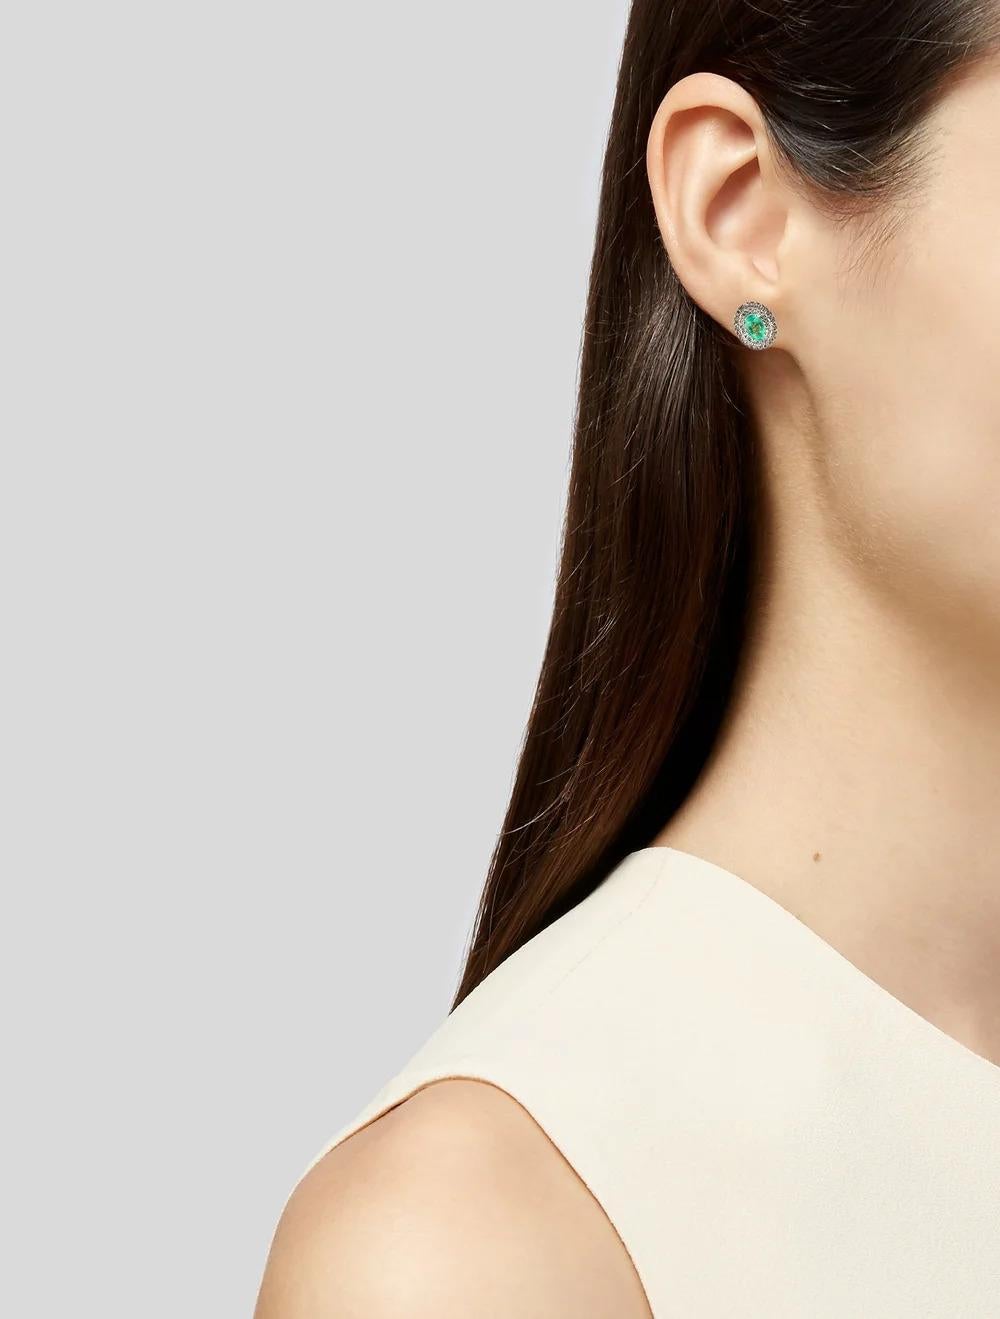 Oval Cut 14K Emerald & Diamond Stud Earrings - Timeless Elegance, Genuine Gemstones For Sale